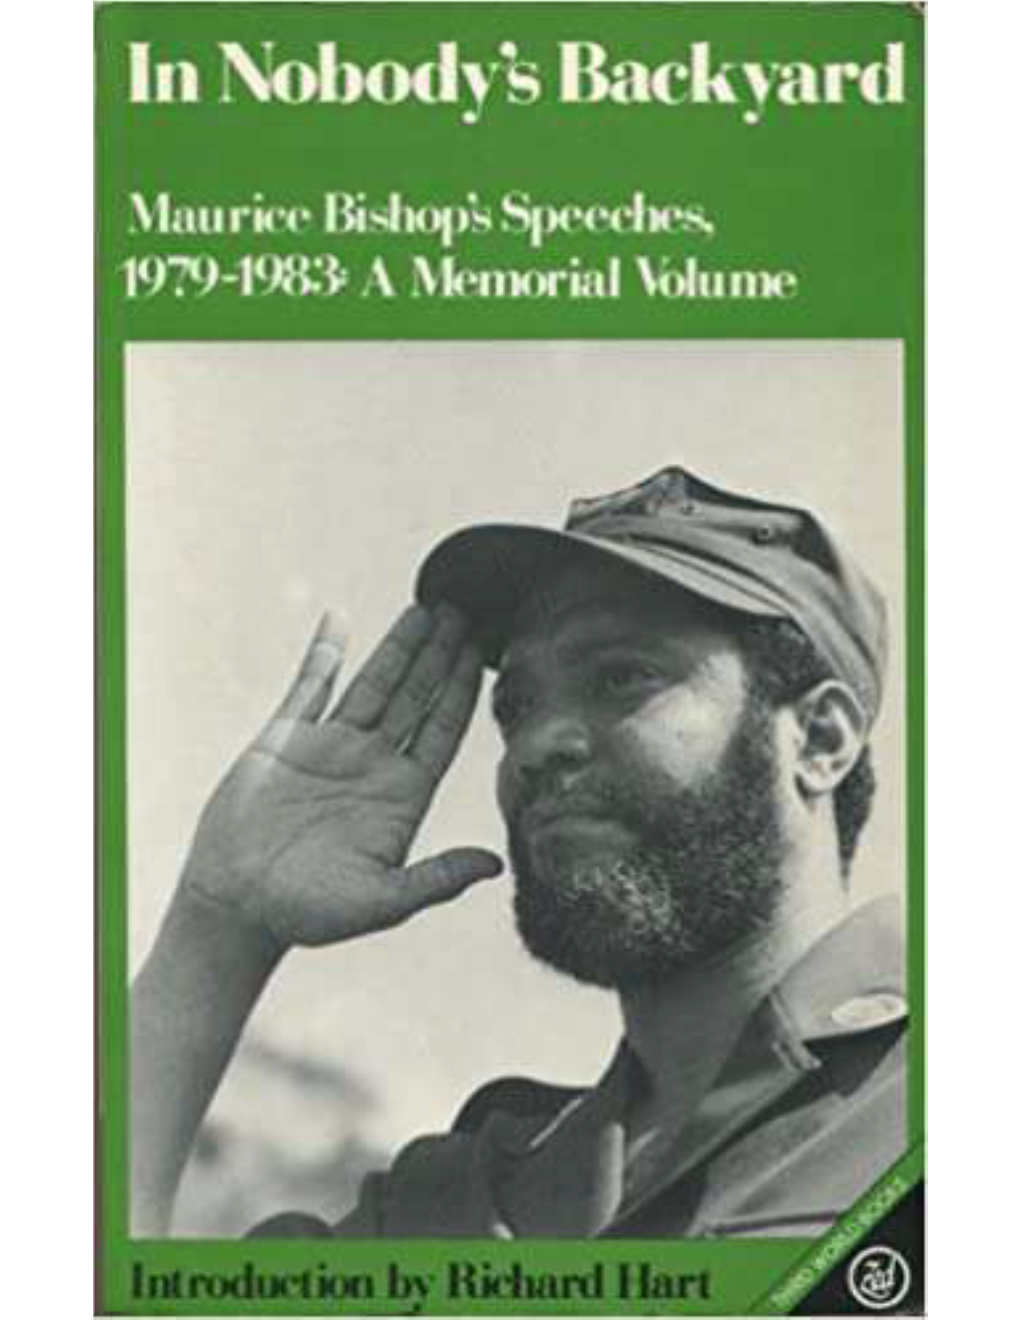 Maurice Bishop’S Speeches, 1979-I983 : a Memorial Volume